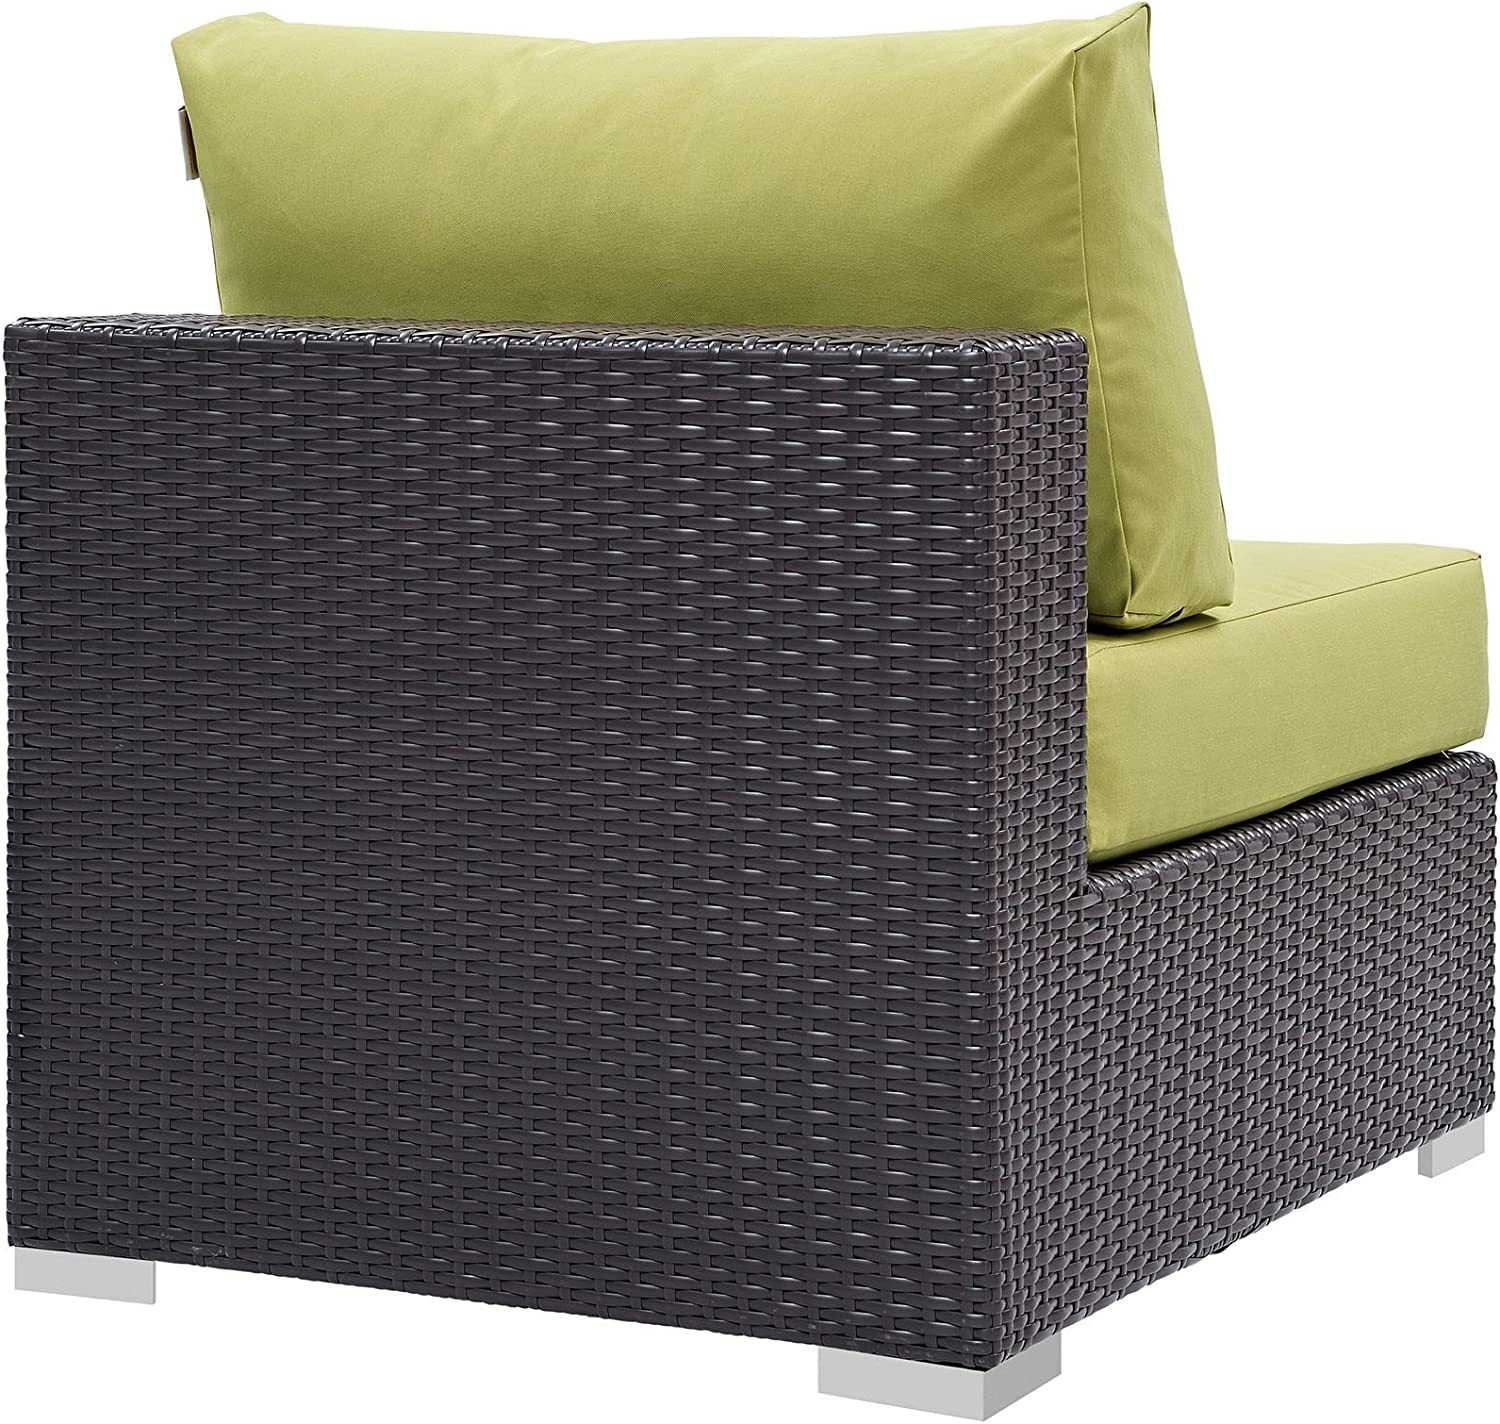 Modway Convene Wicker Rattan Outdoor Patio Sectional Sofa Armless Chair in Espresso Peridot